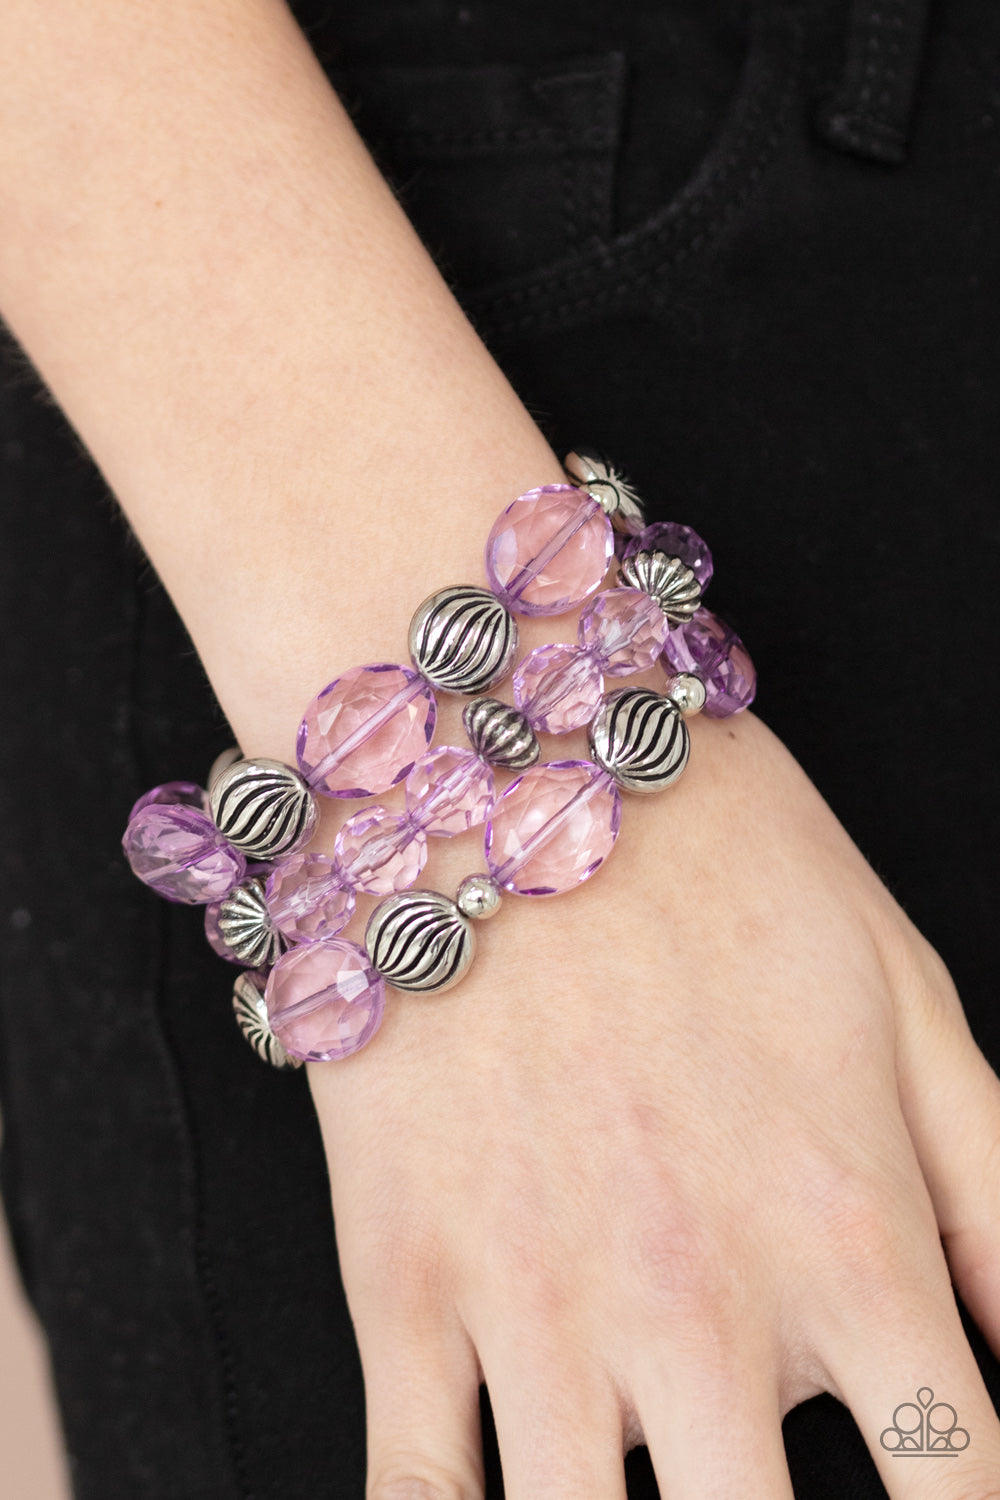 Paparazzi Crystal Charisma - Purple Bracelet - A Finishing Touch Jewelry